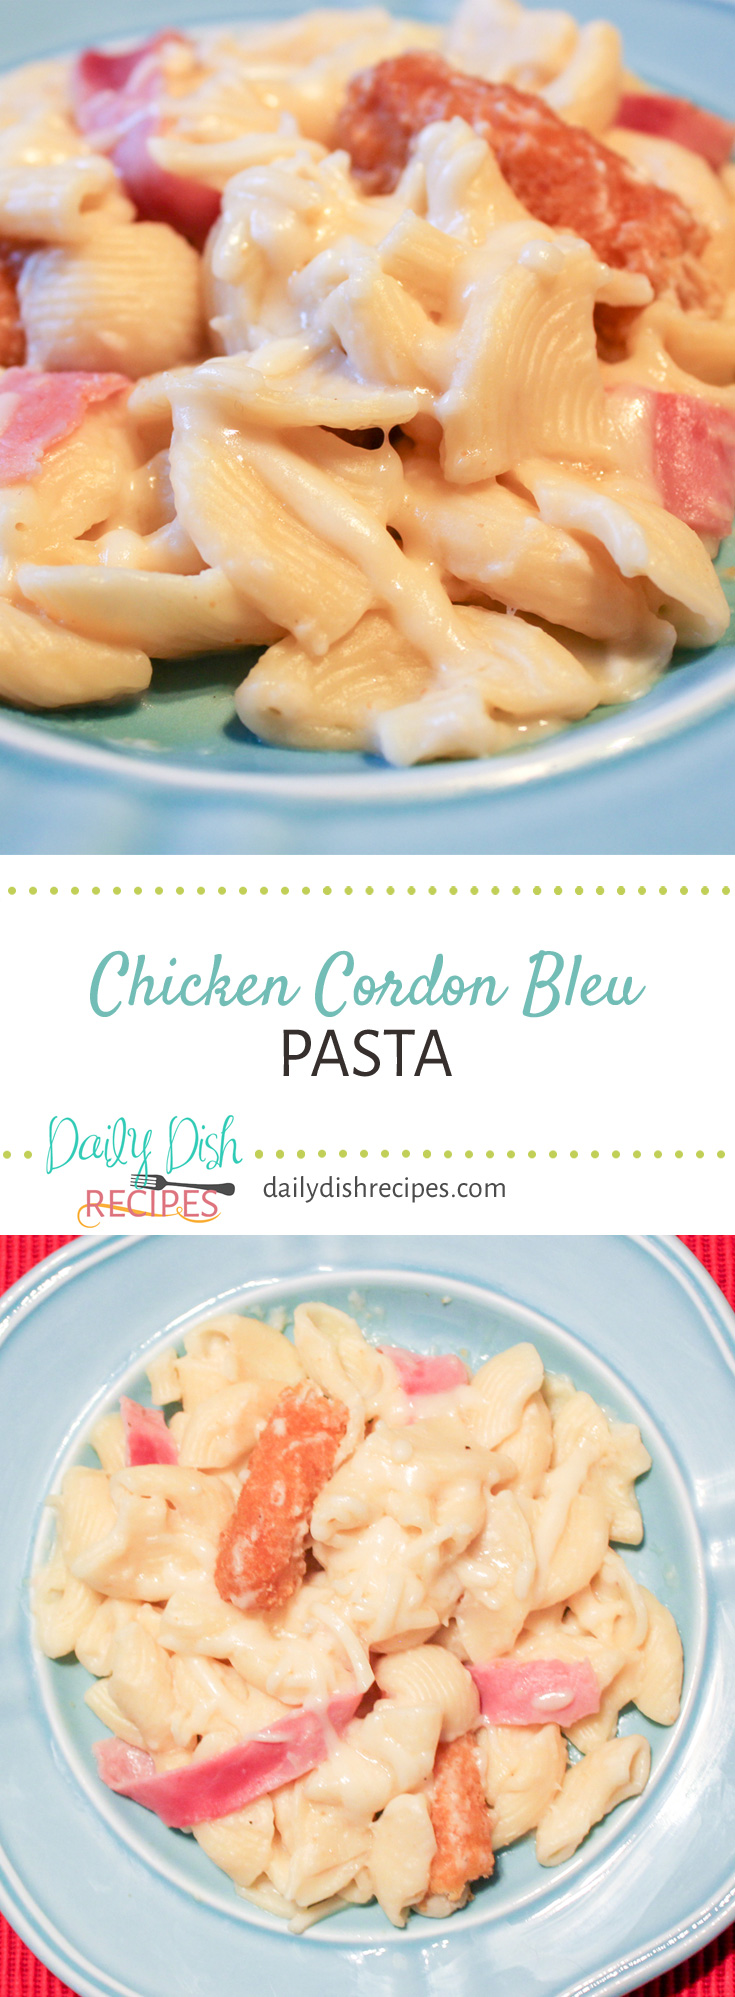 Chicken Cordon Bleu Pasta | Tastes Like the Real Thing!